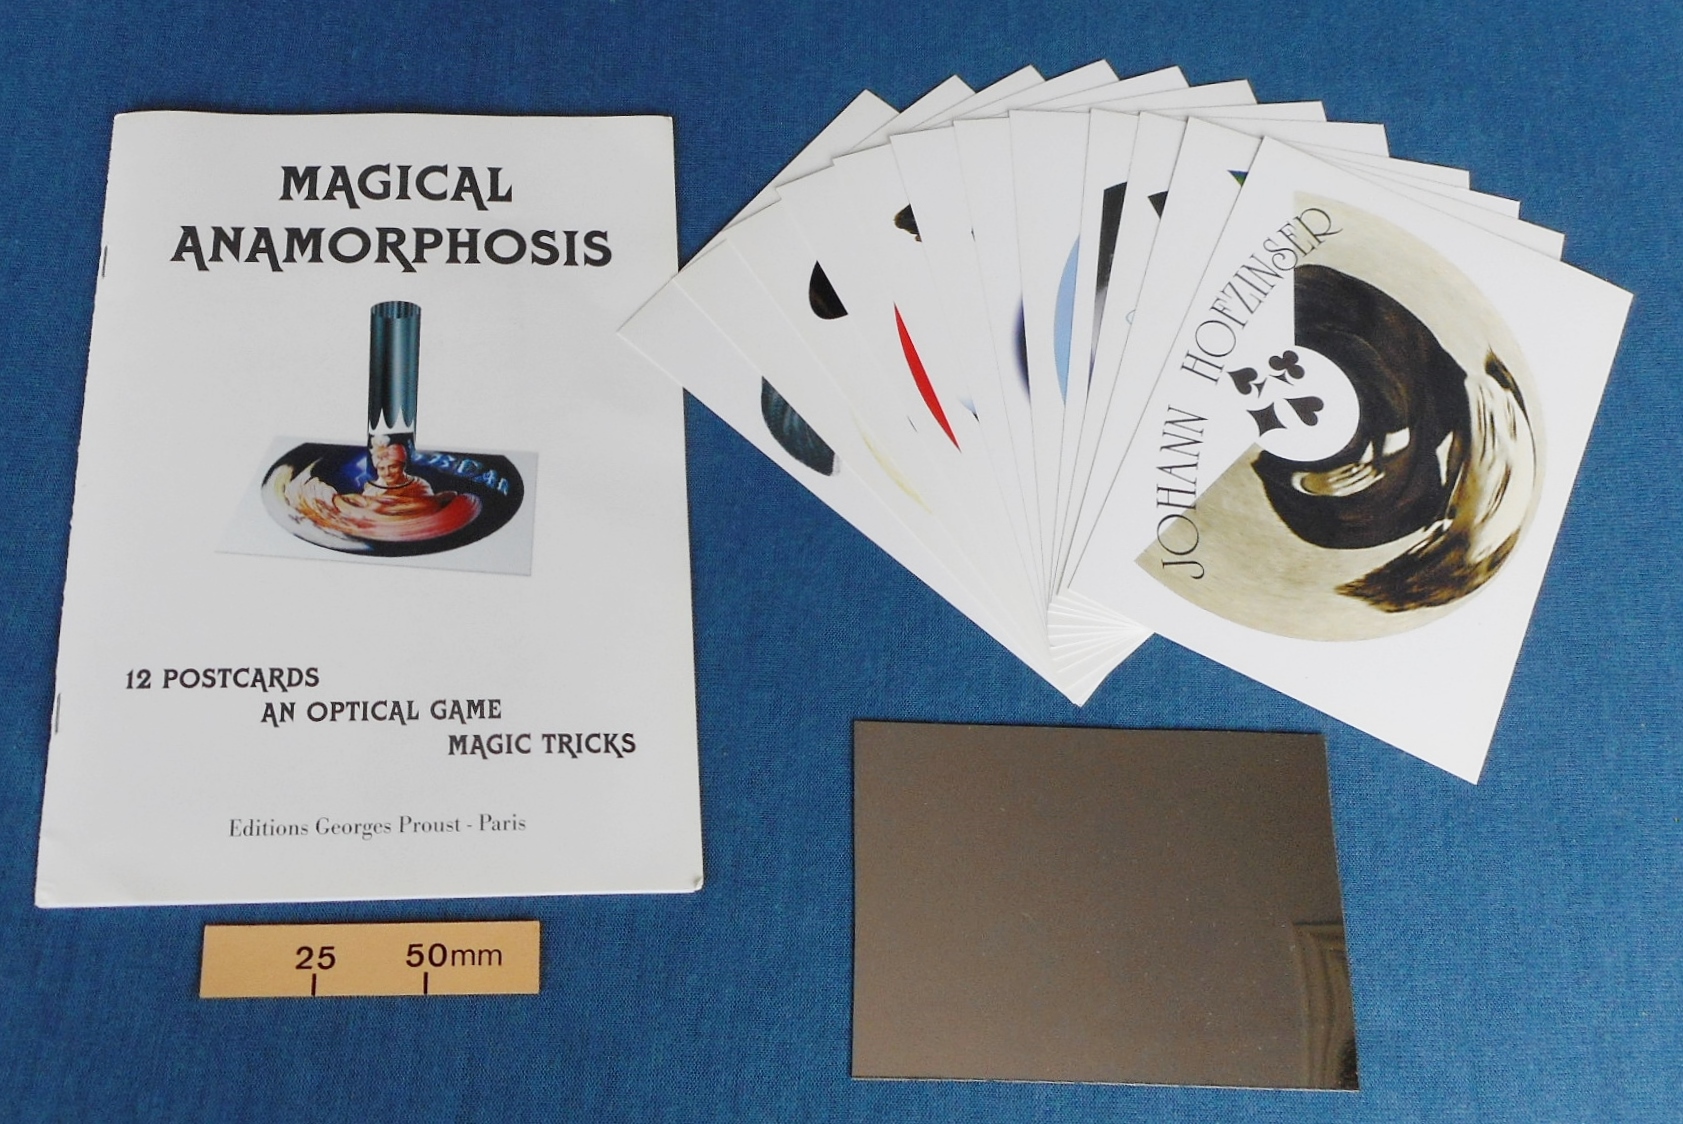 Magical Anamorphosis: 12 Postcards, An optical game, Magic tricks